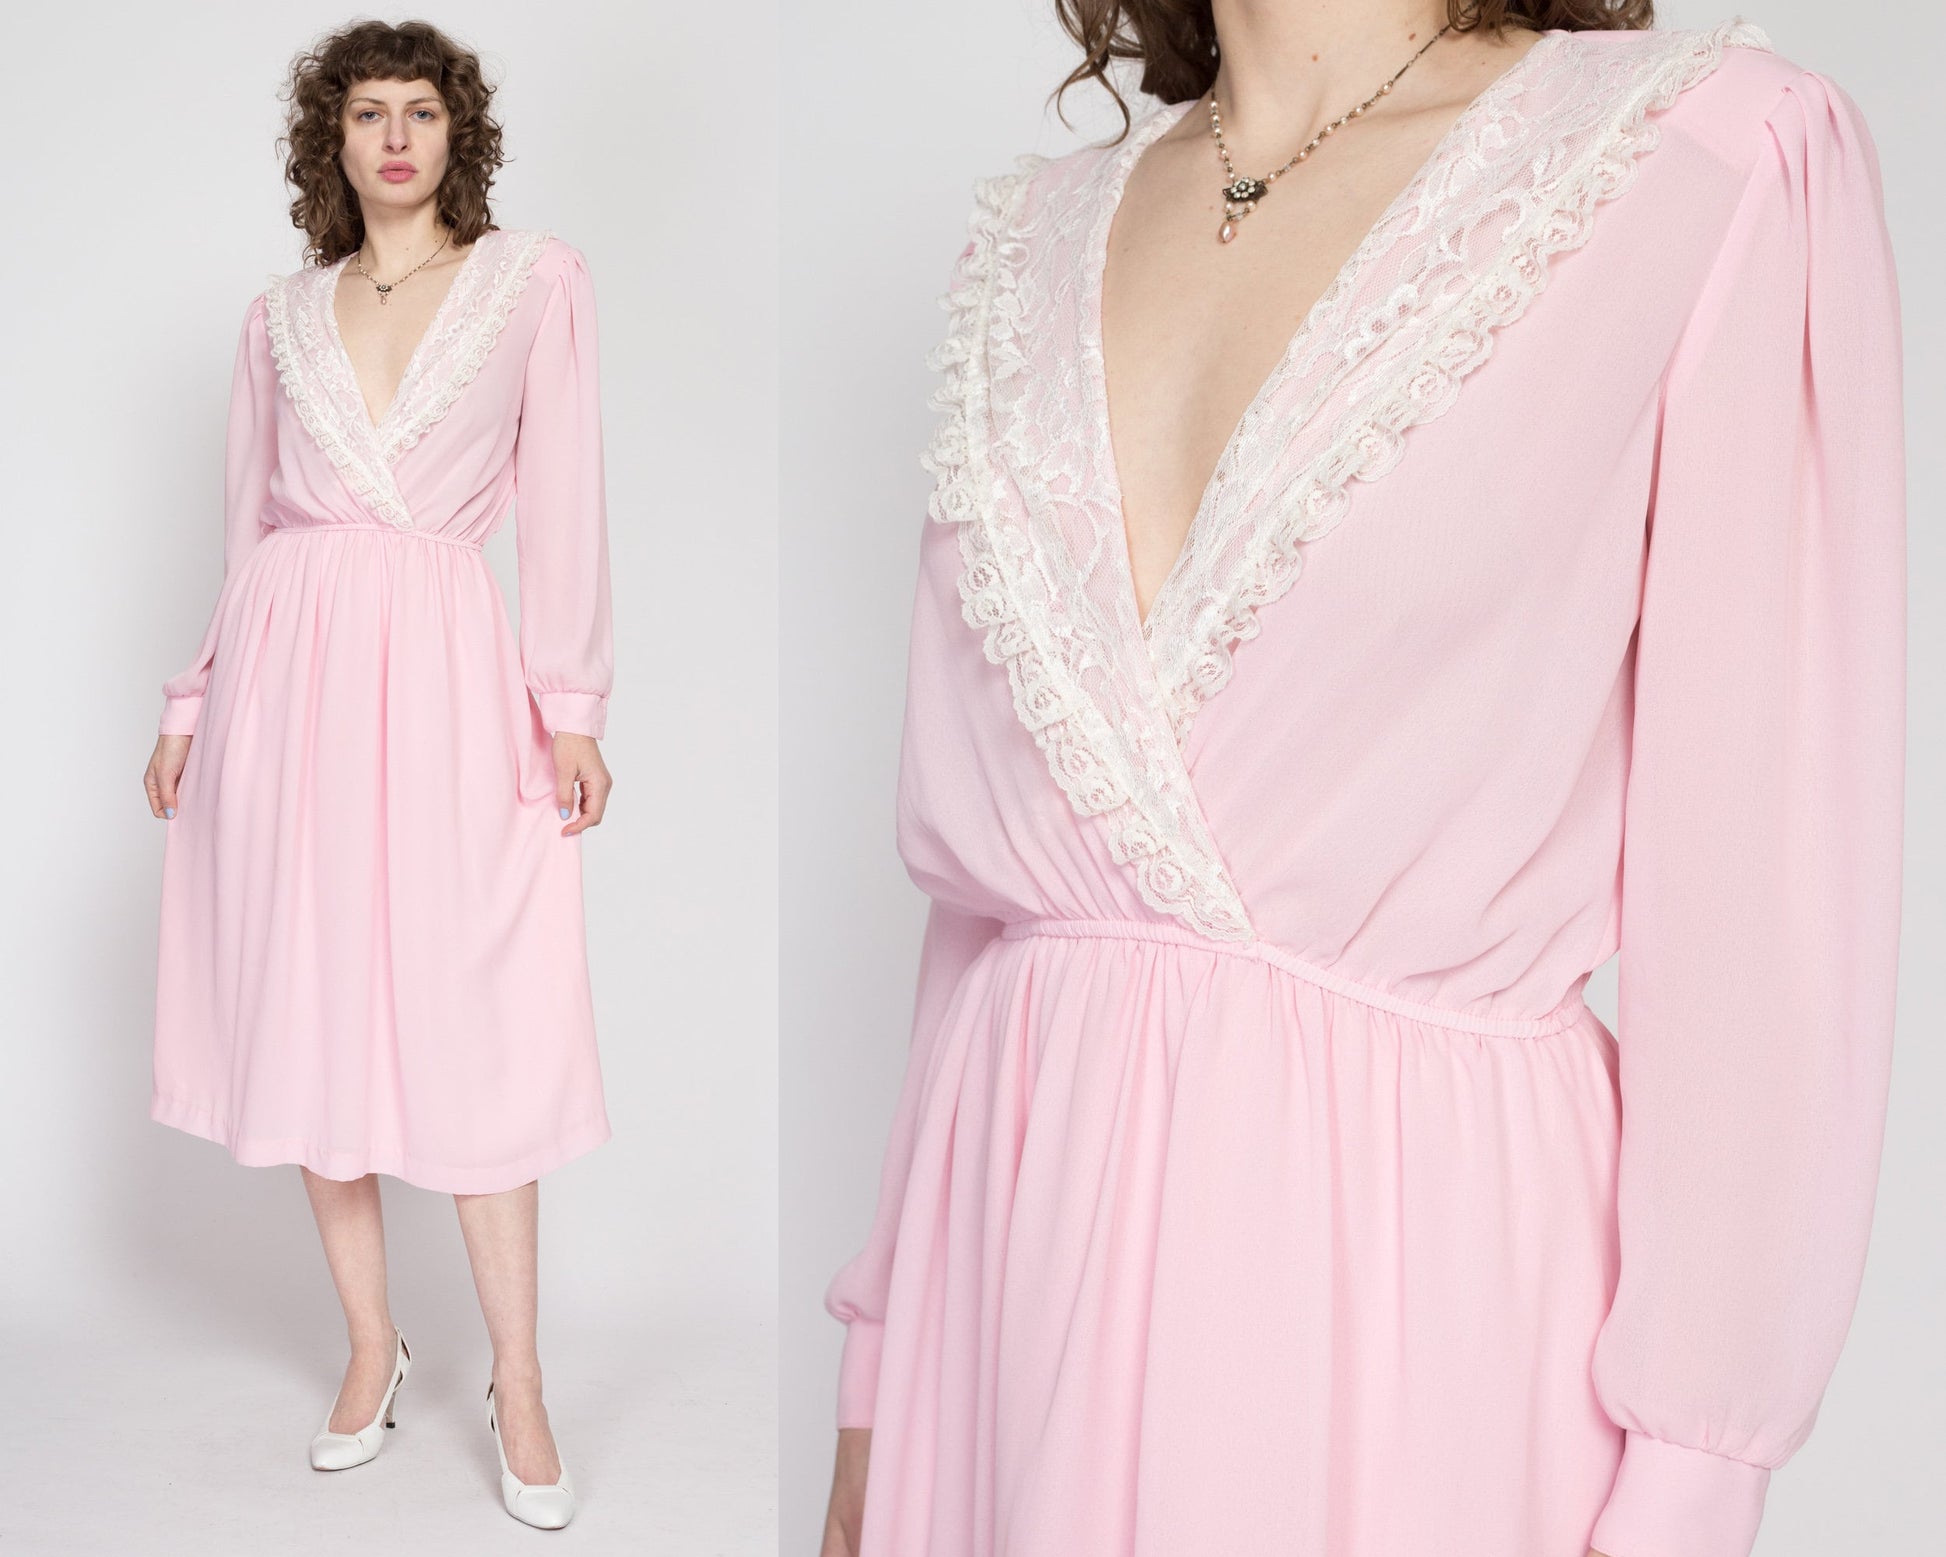 Vintage 70s 80s Pink Dotted Sheer Floor Length Dress